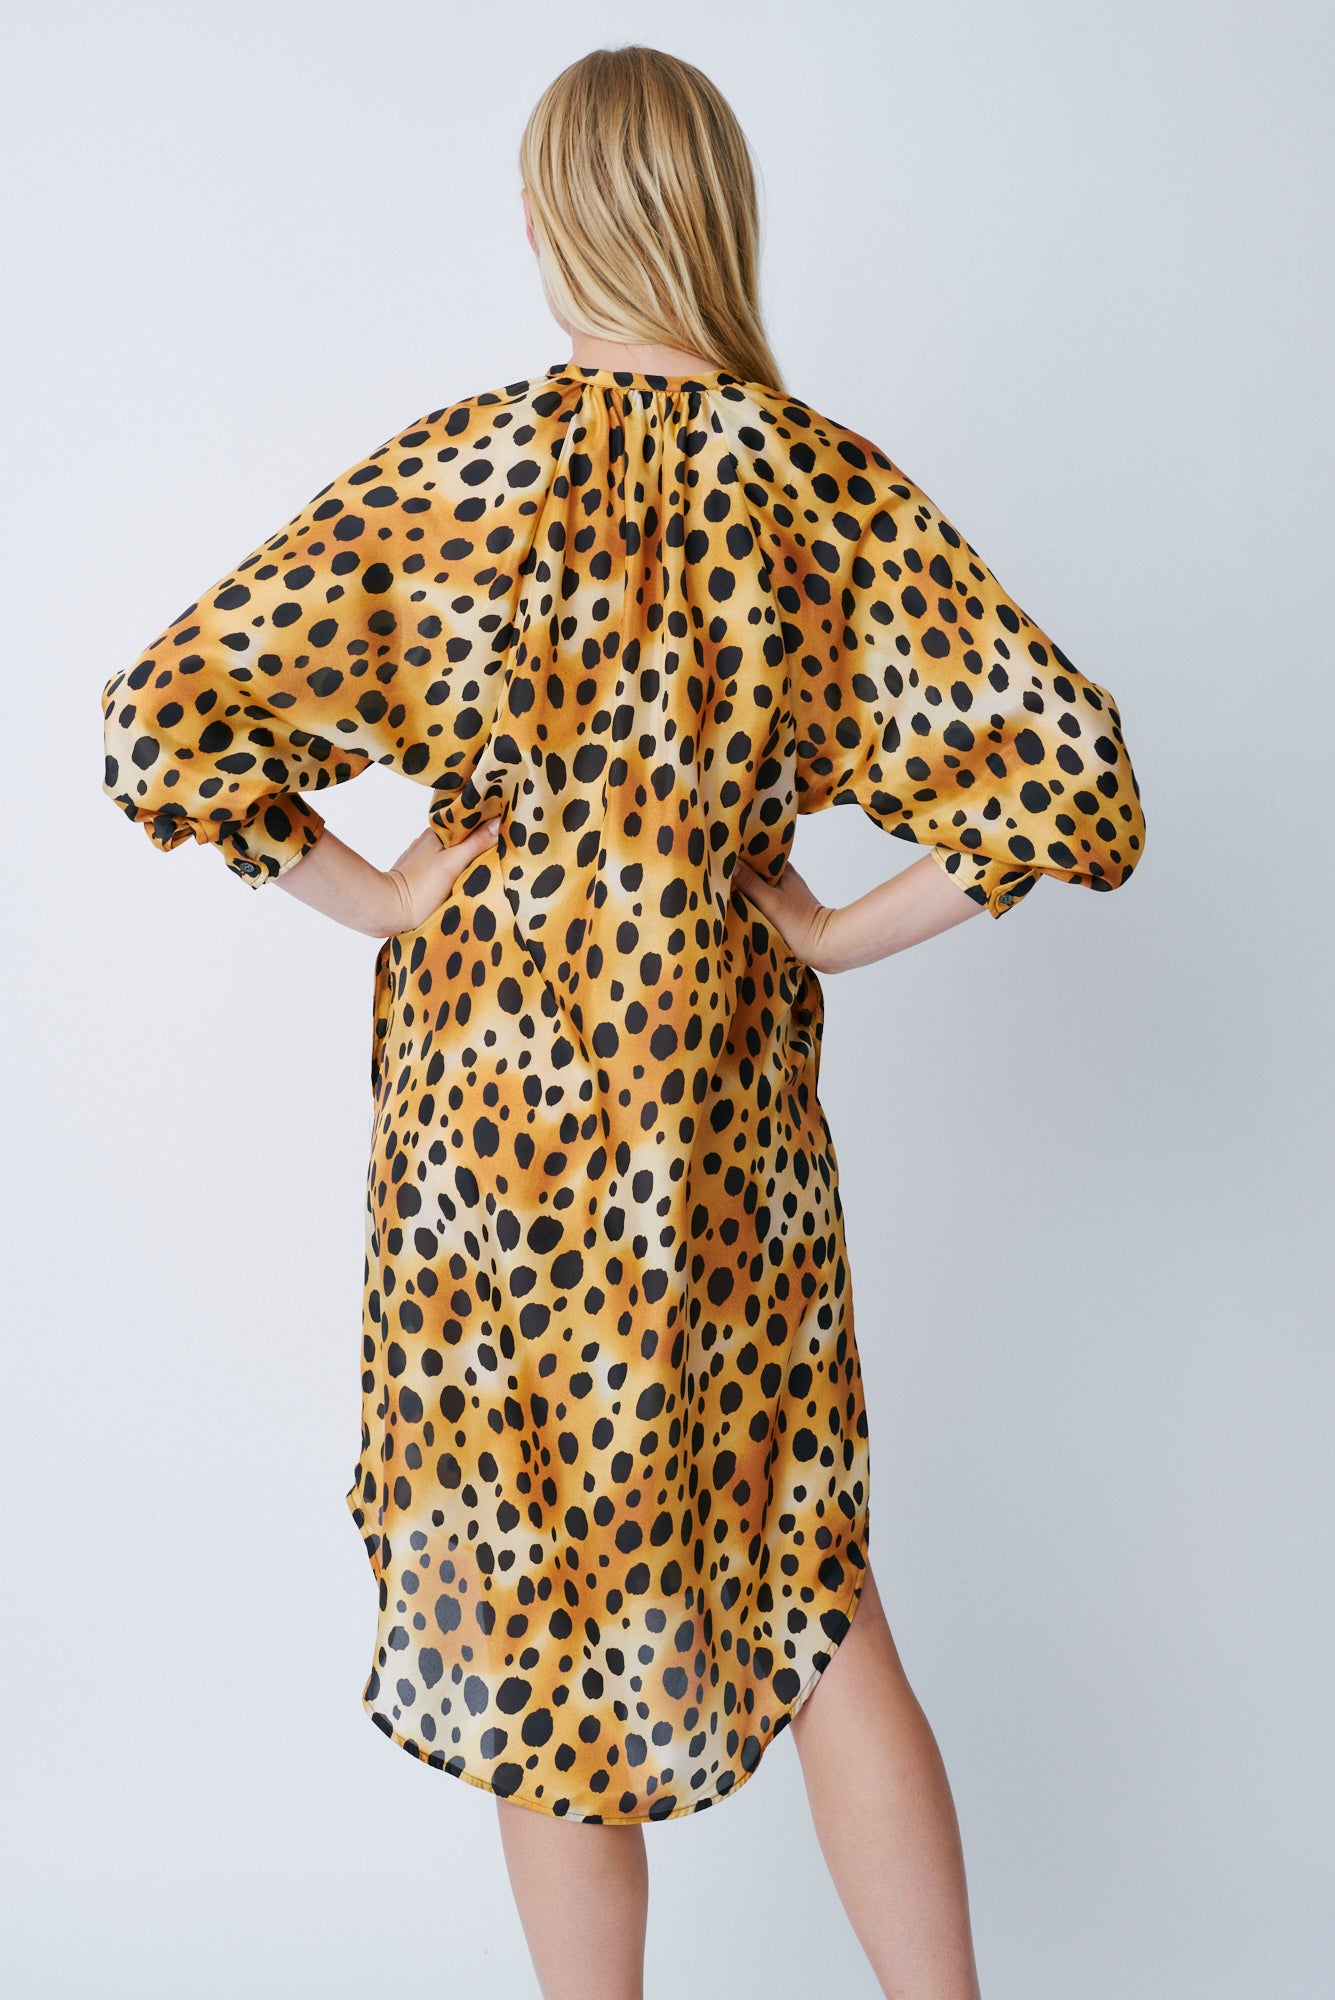 Classic Cheetah Vintage Wash Print Silk Poet Dress Back Close-Up View